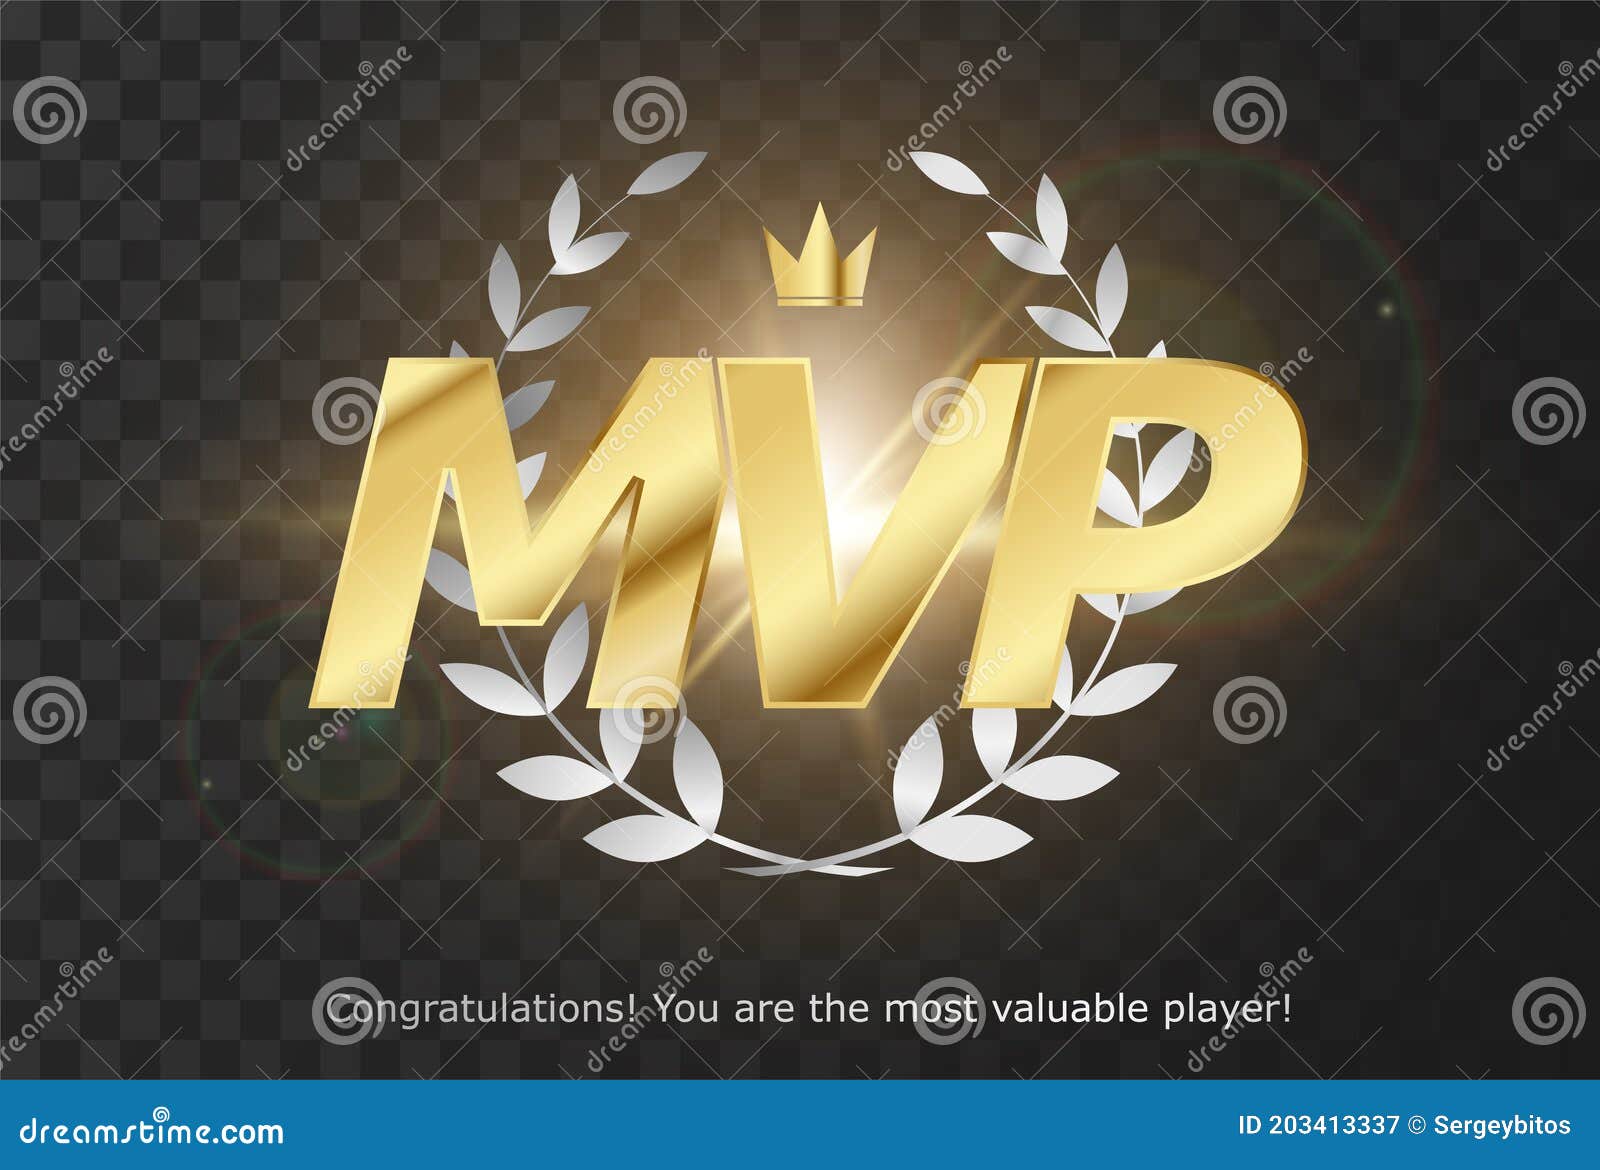 gold inscription mvp - emblem reward most valuable player